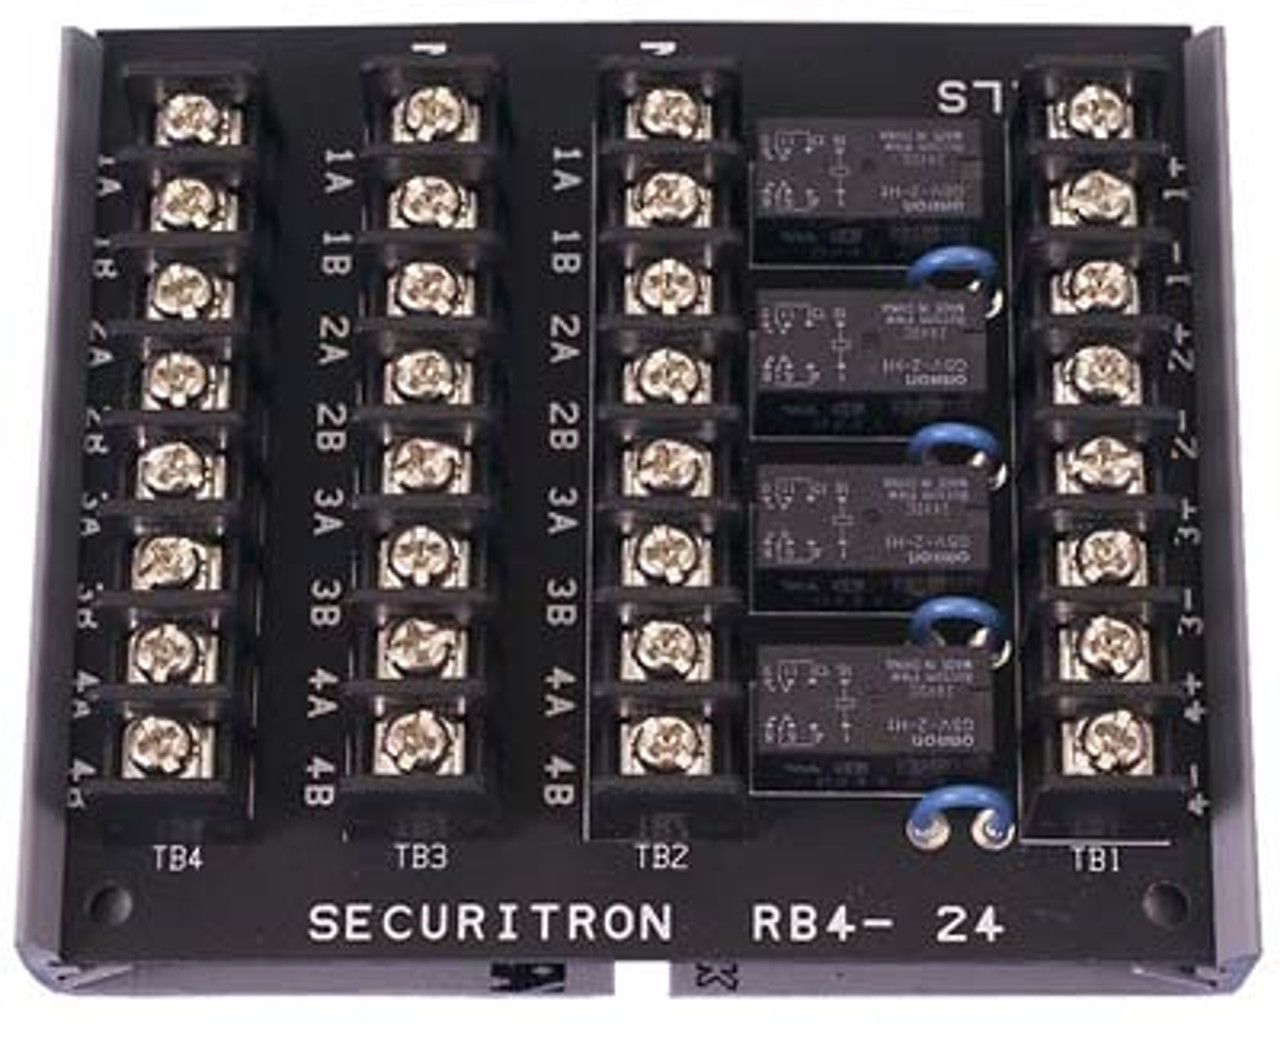 RLP-12 Securitron Relay Logic Pack